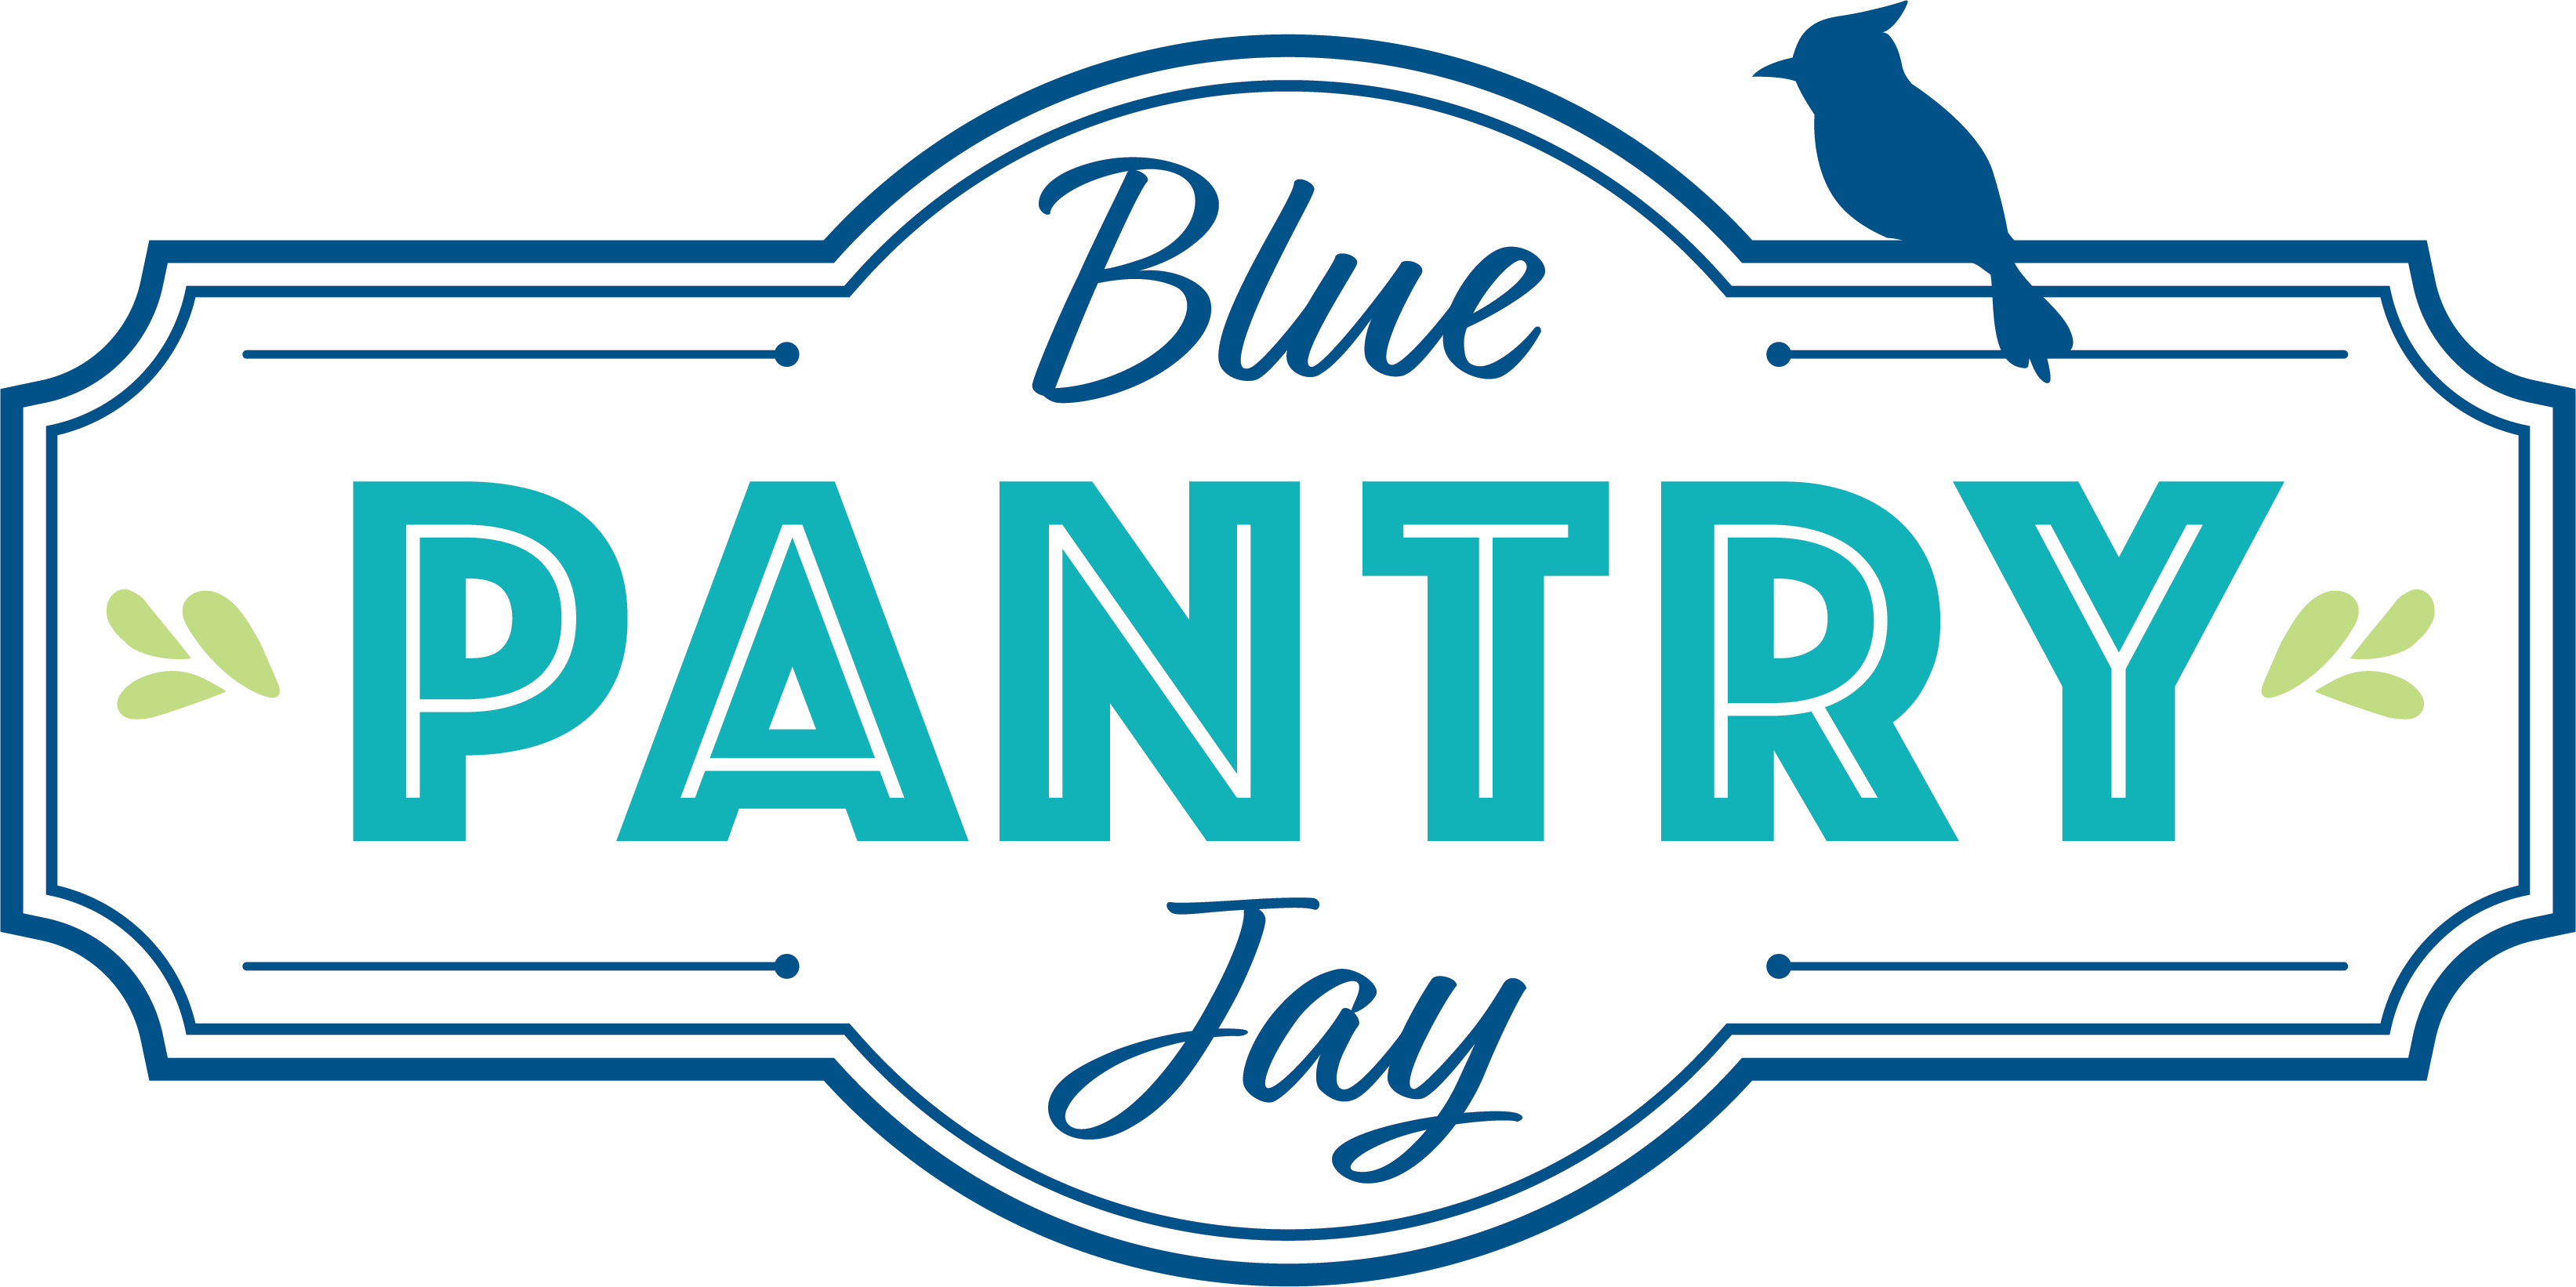 Blue Jay Pantry logo